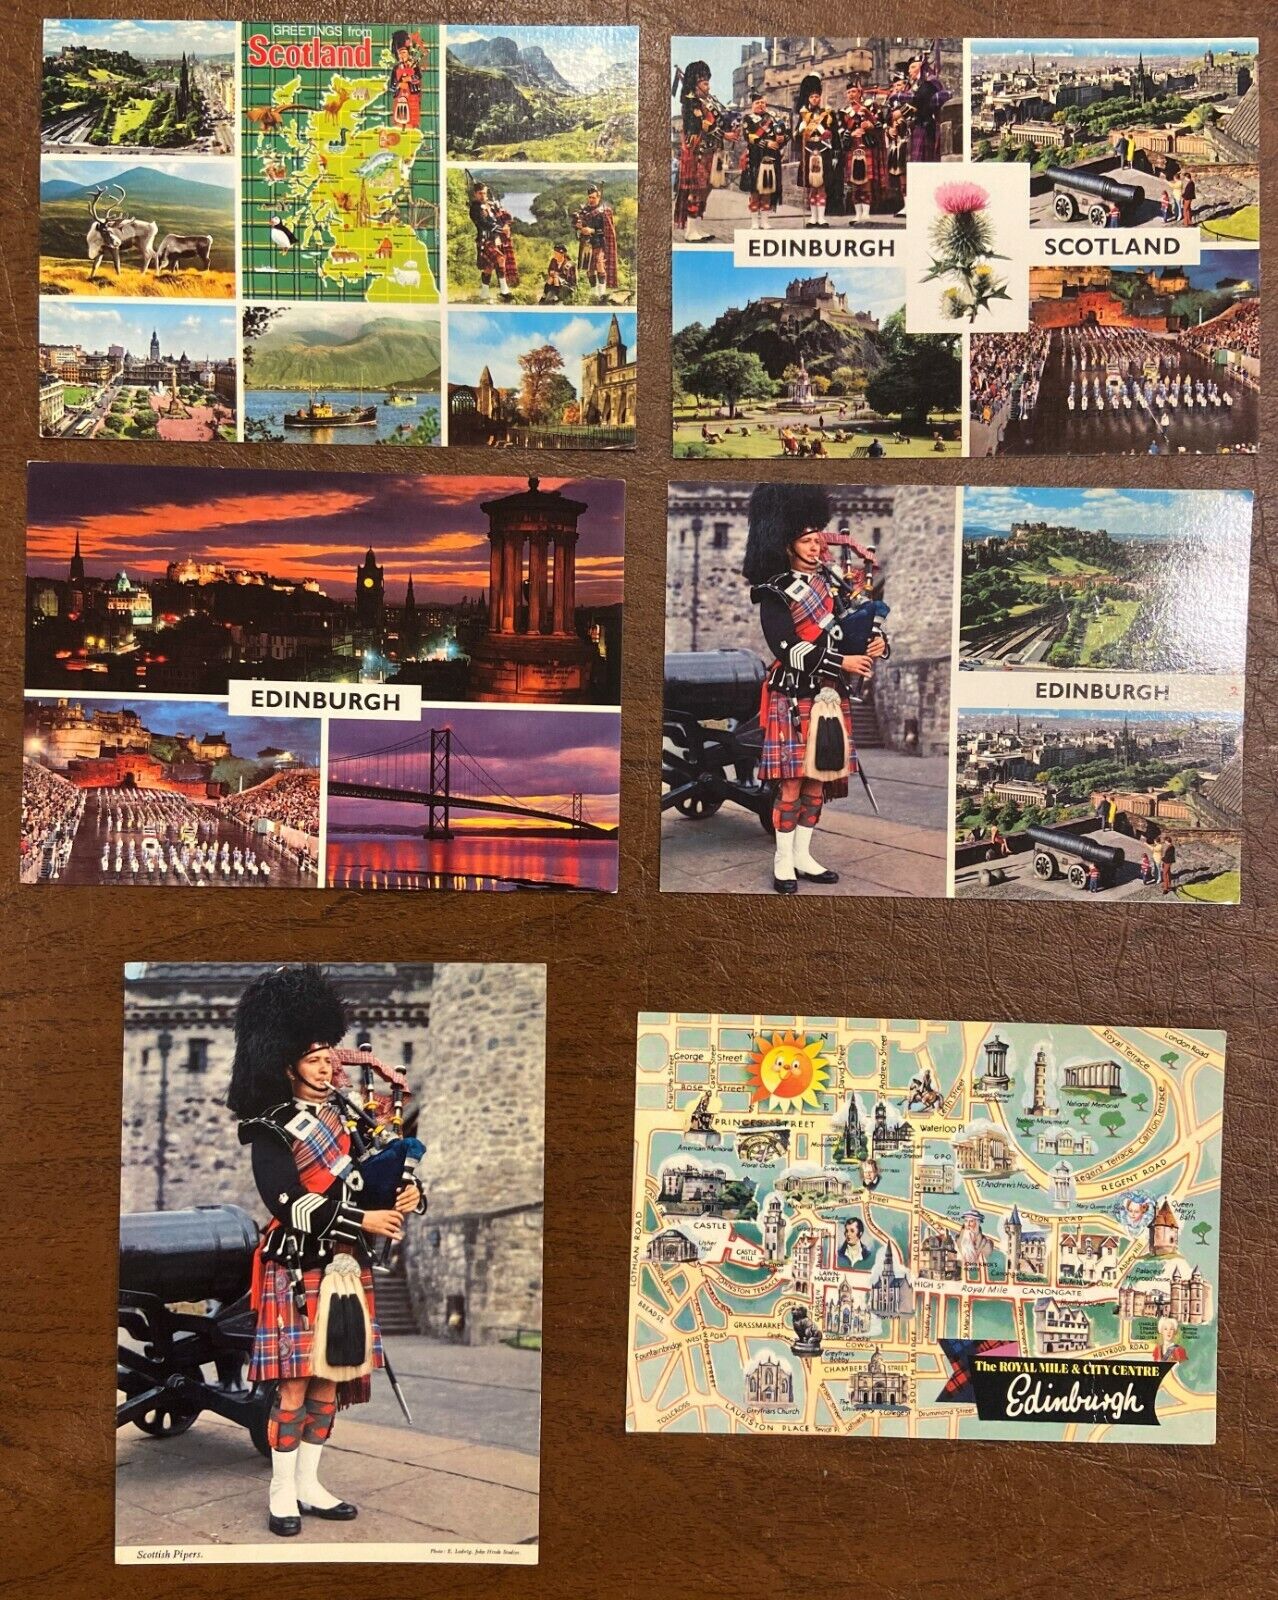 Edinburgh Postcards - produced in 1970 or 1980